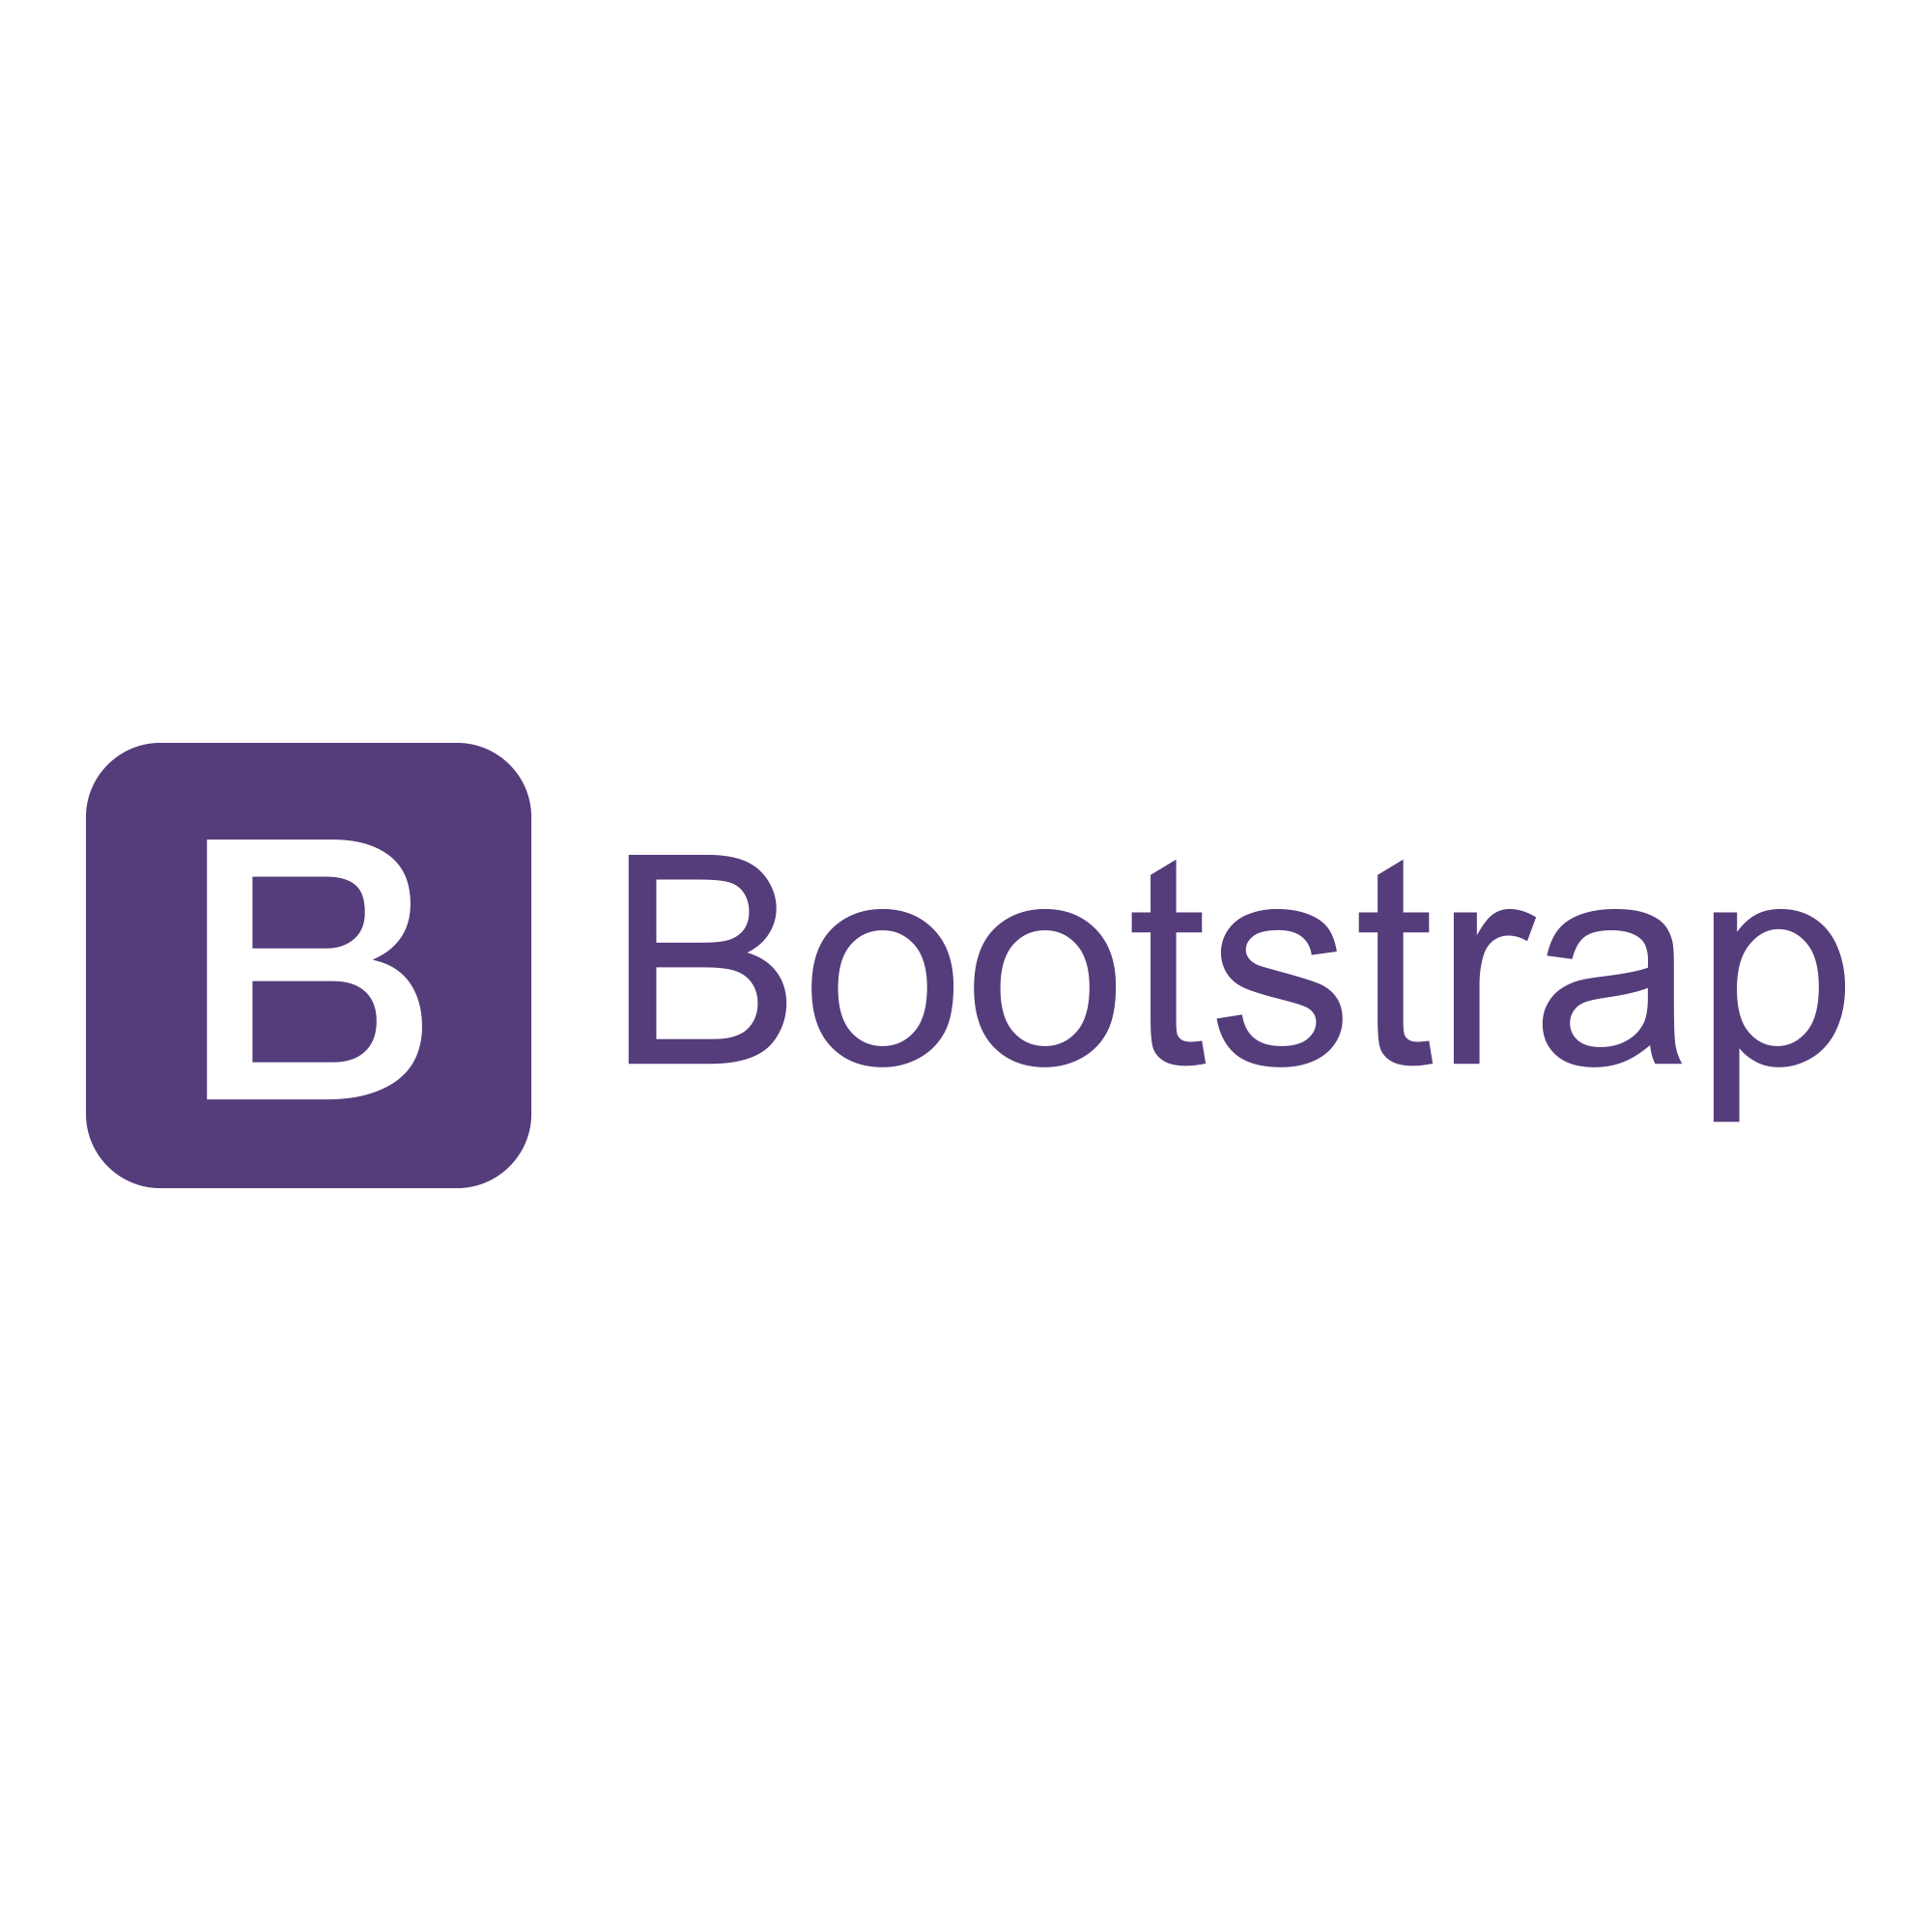 Bootstrap group. Bootstrap. Картинка Bootstrap. Бутстрап логотип. Логотип Bootstrap PNG.